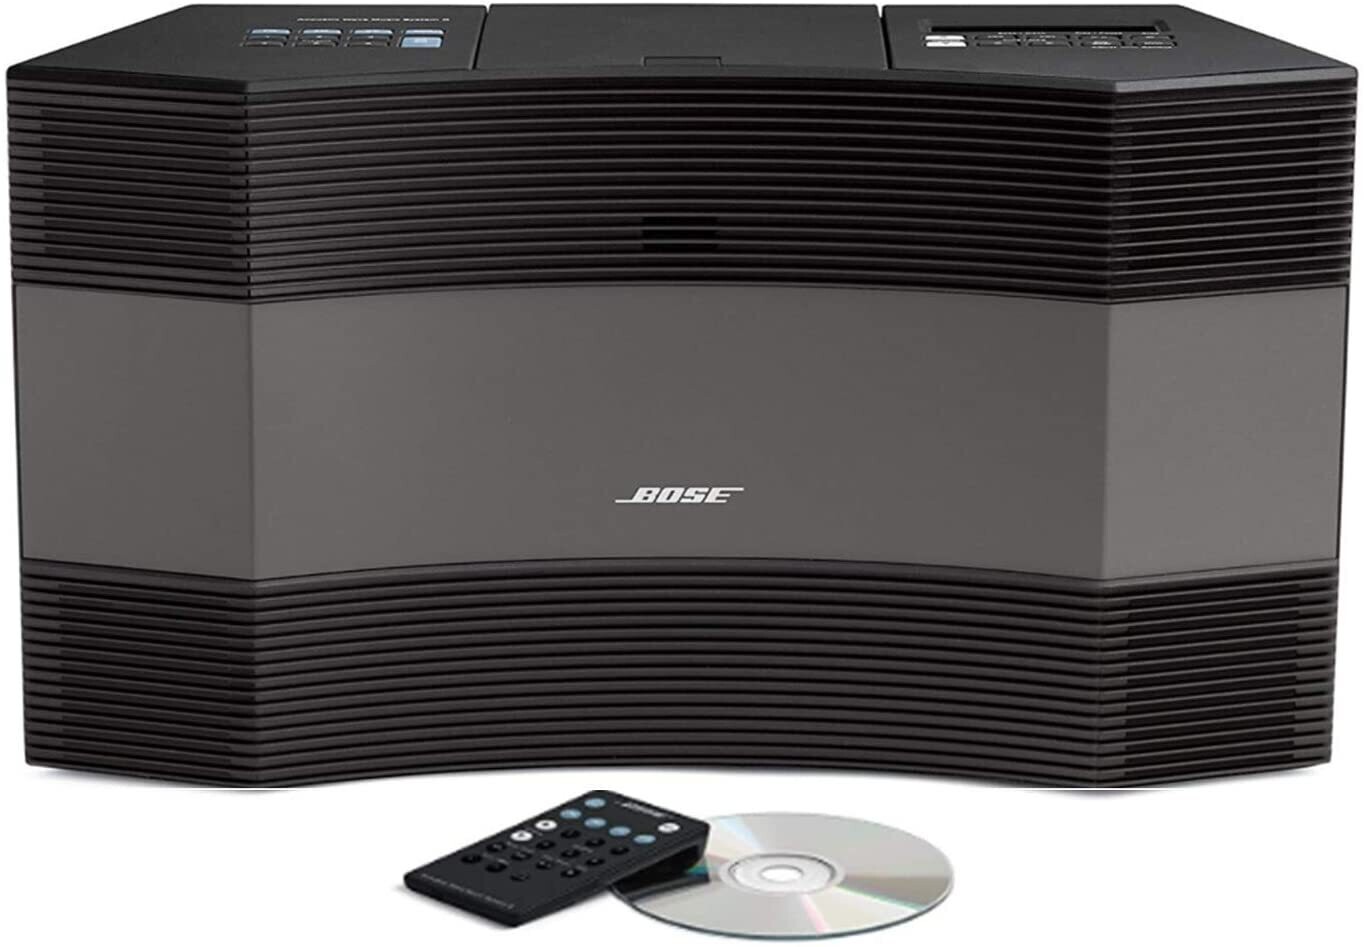 Bose Acoustic Wave Music System CD-3000, Graphite Grey Black